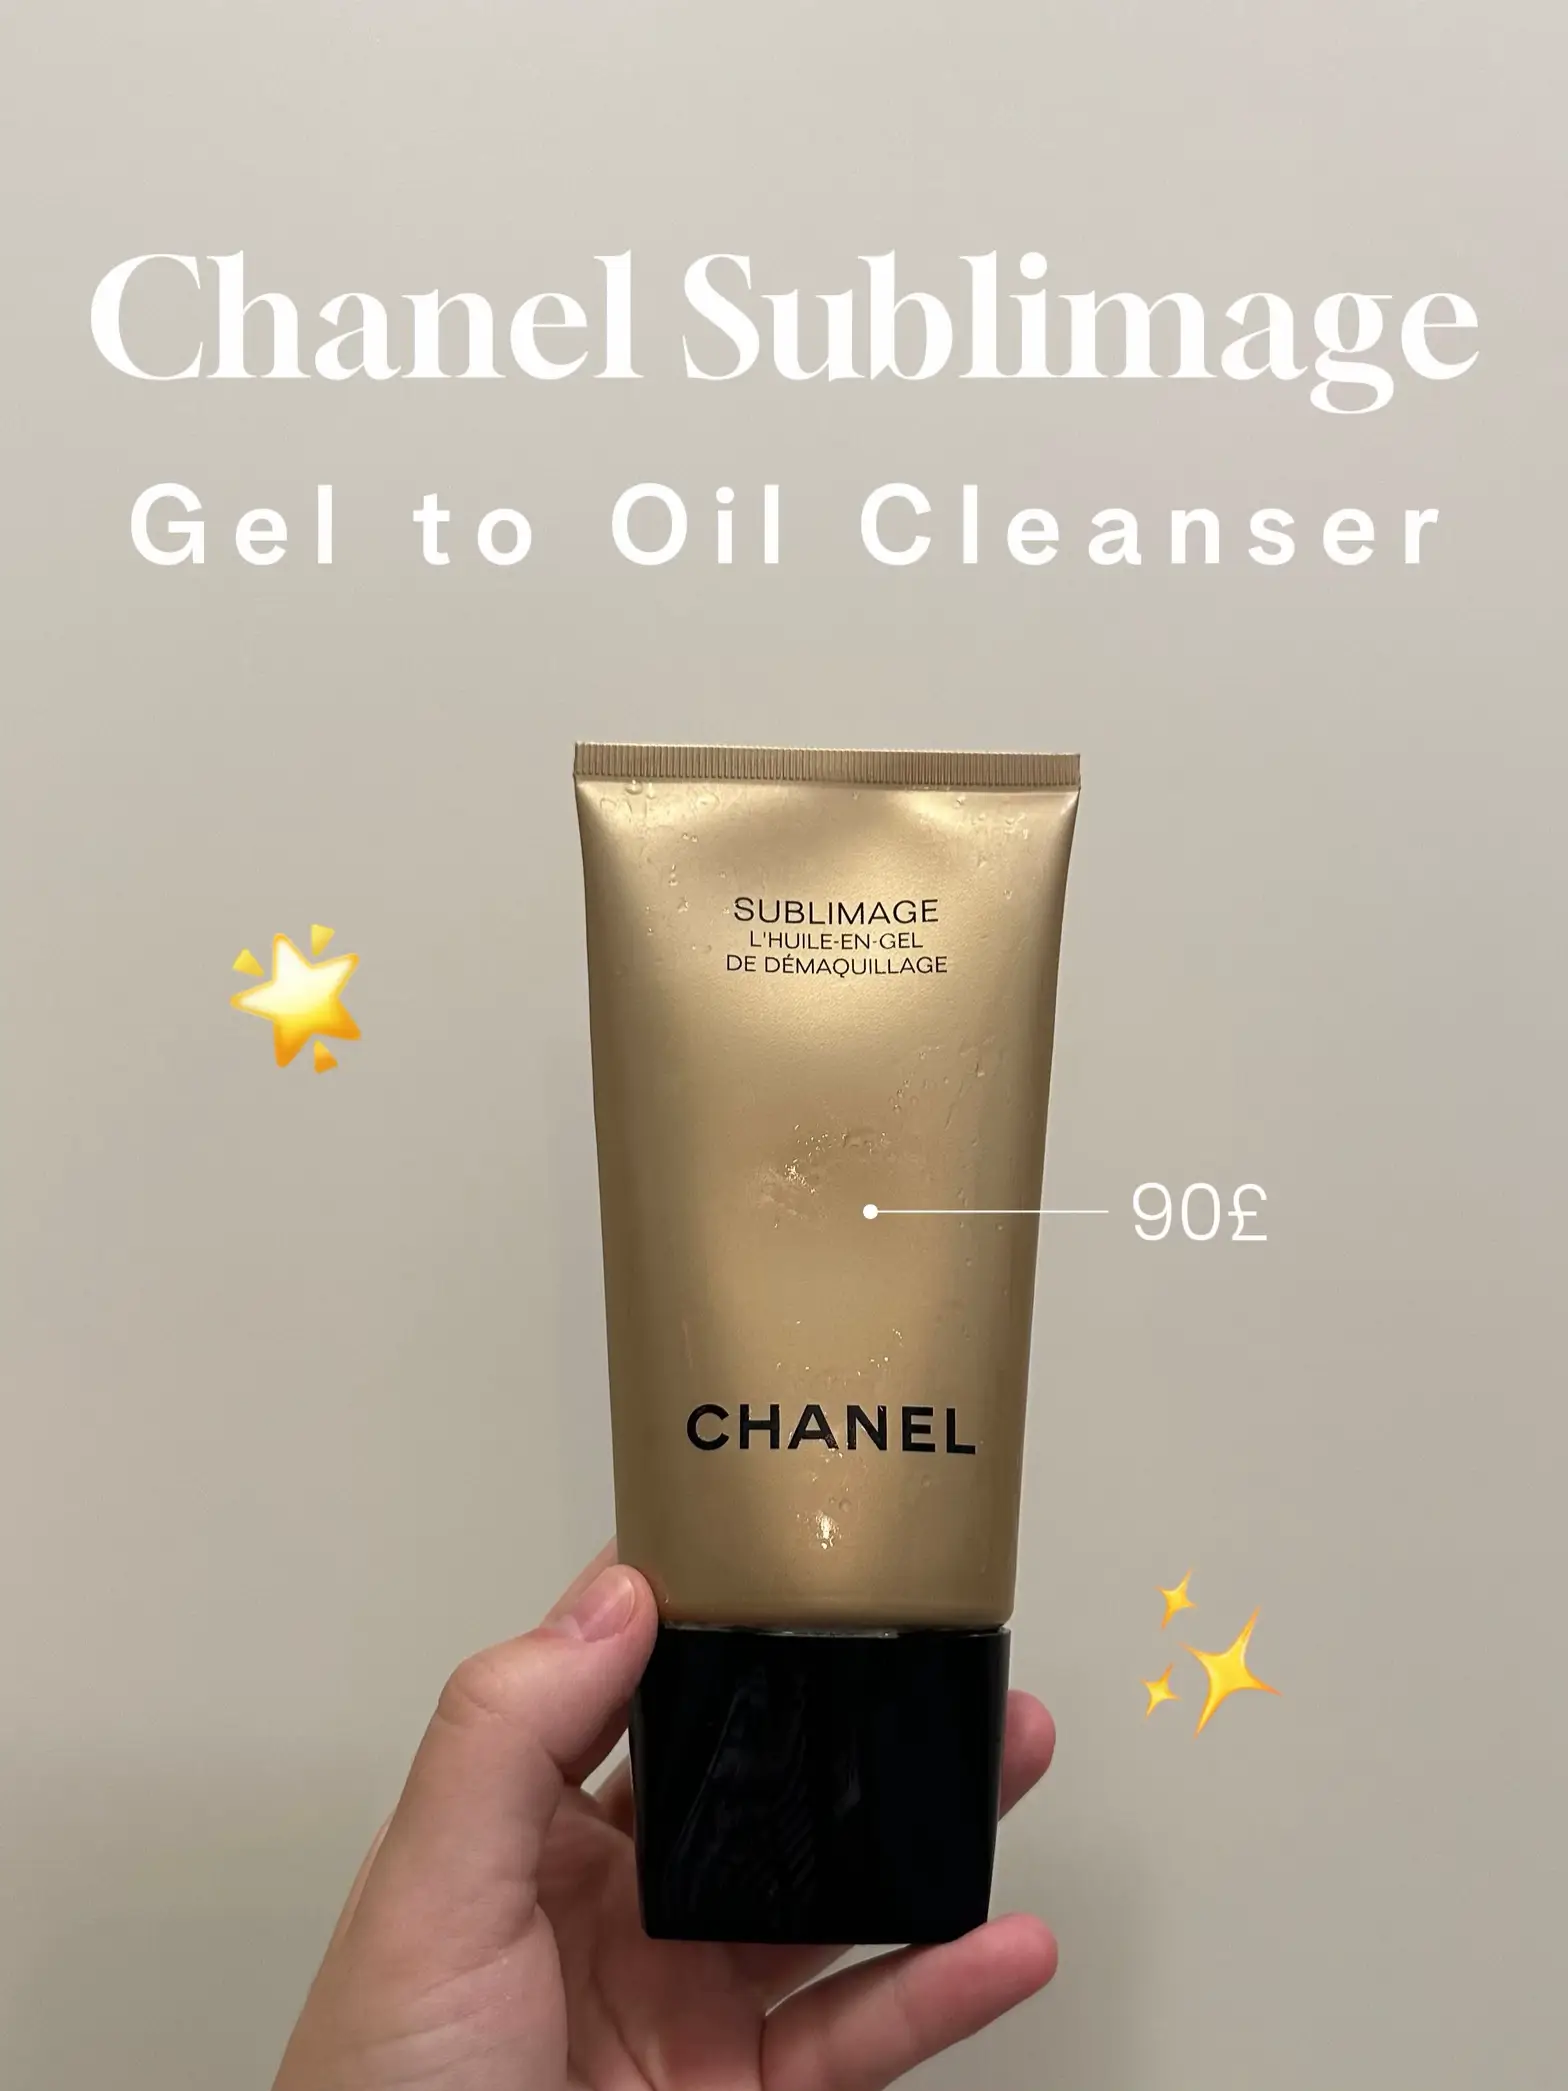 Chanel Sublimage L'Huile en Gel de Demaquillage, Gallery posted by  Skincare_zu